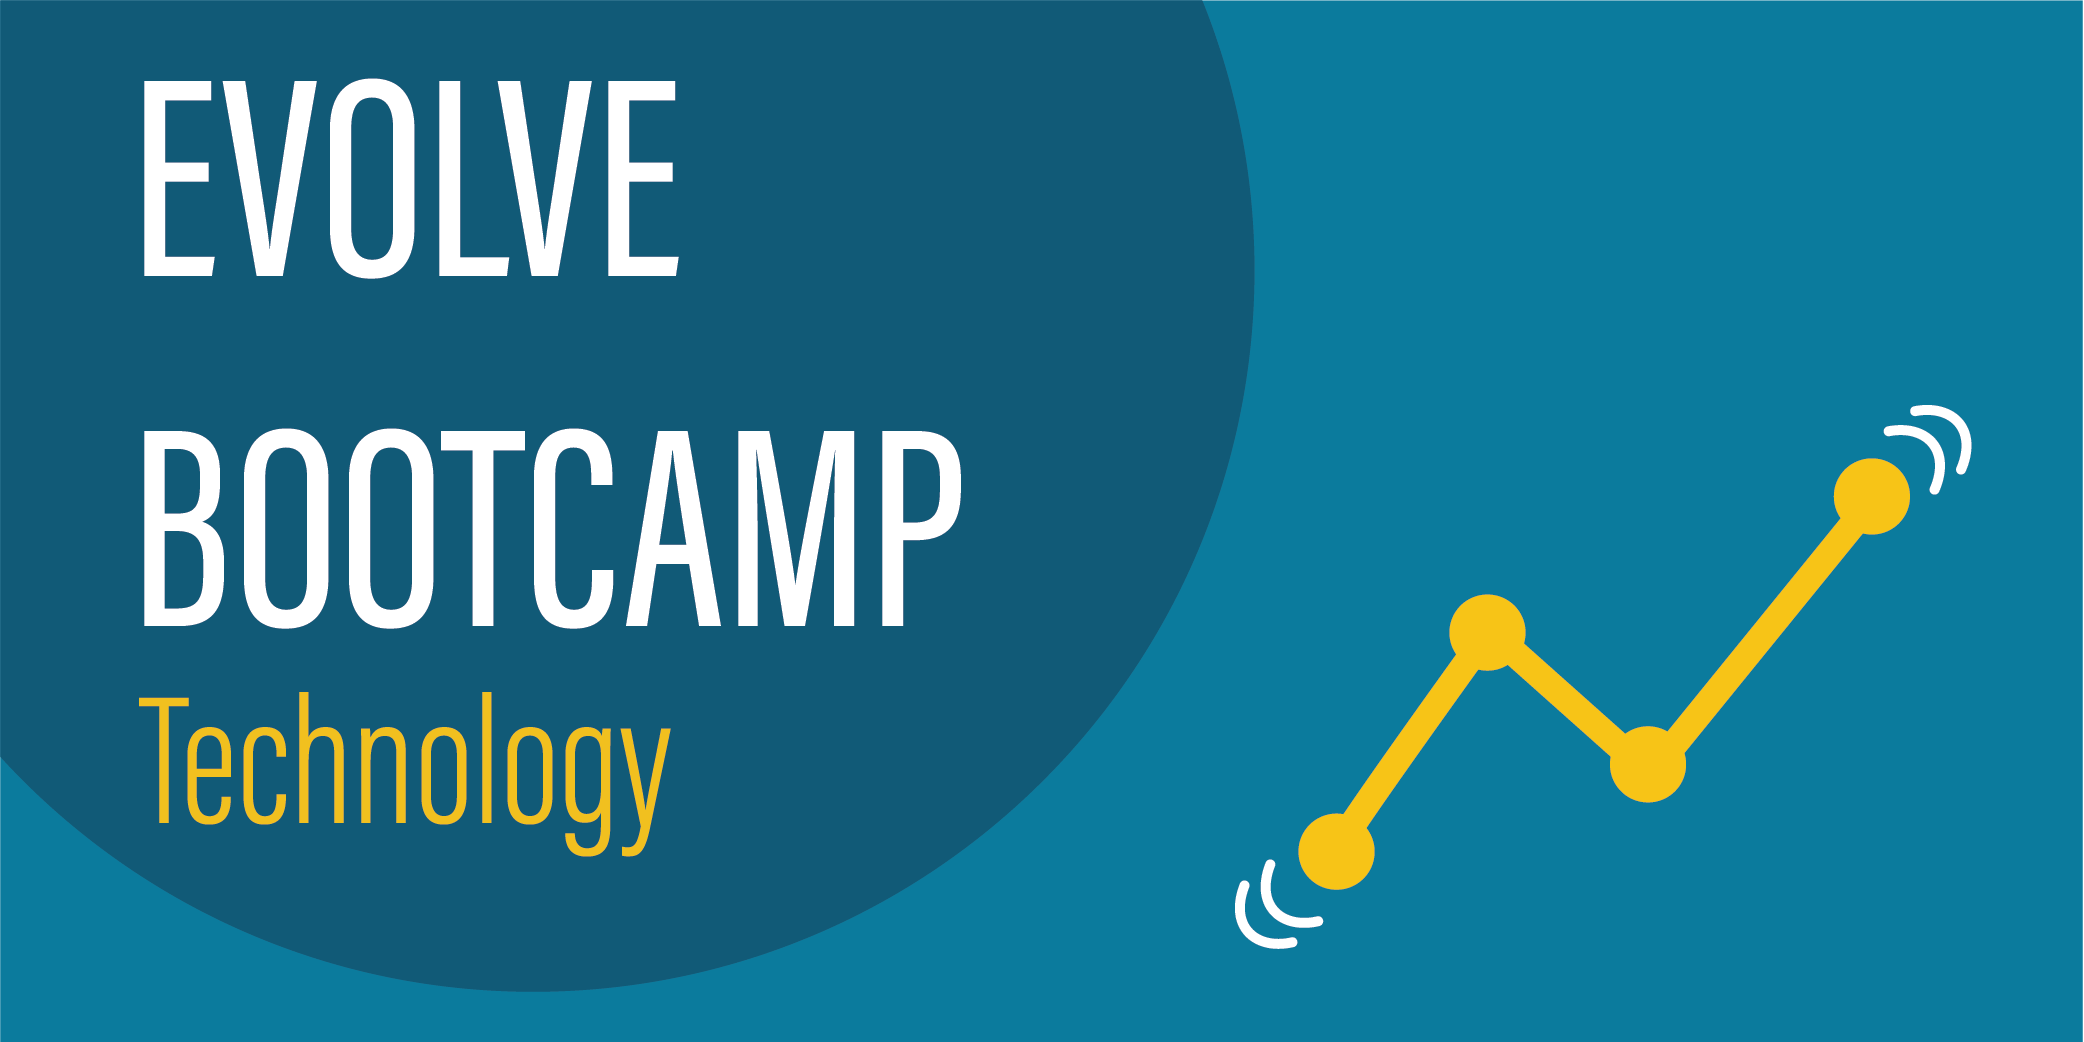 Evolve Bootcamp Technology